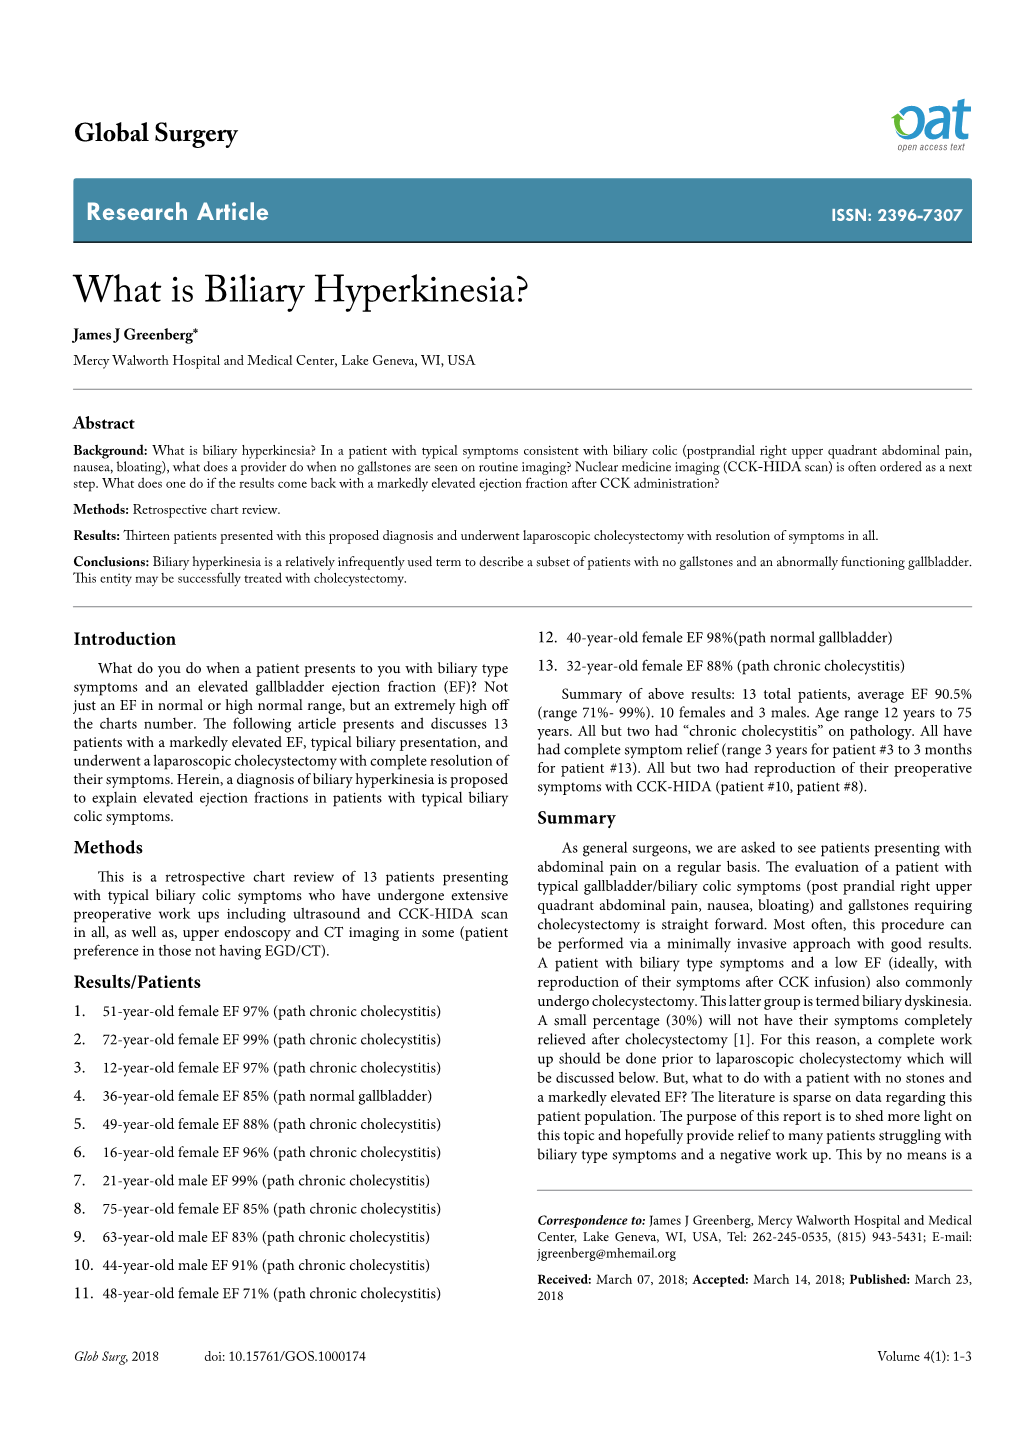 What Is Biliary Hyperkinesia? James J Greenberg* Mercy Walworth Hospital and Medical Center, Lake Geneva, WI, USA